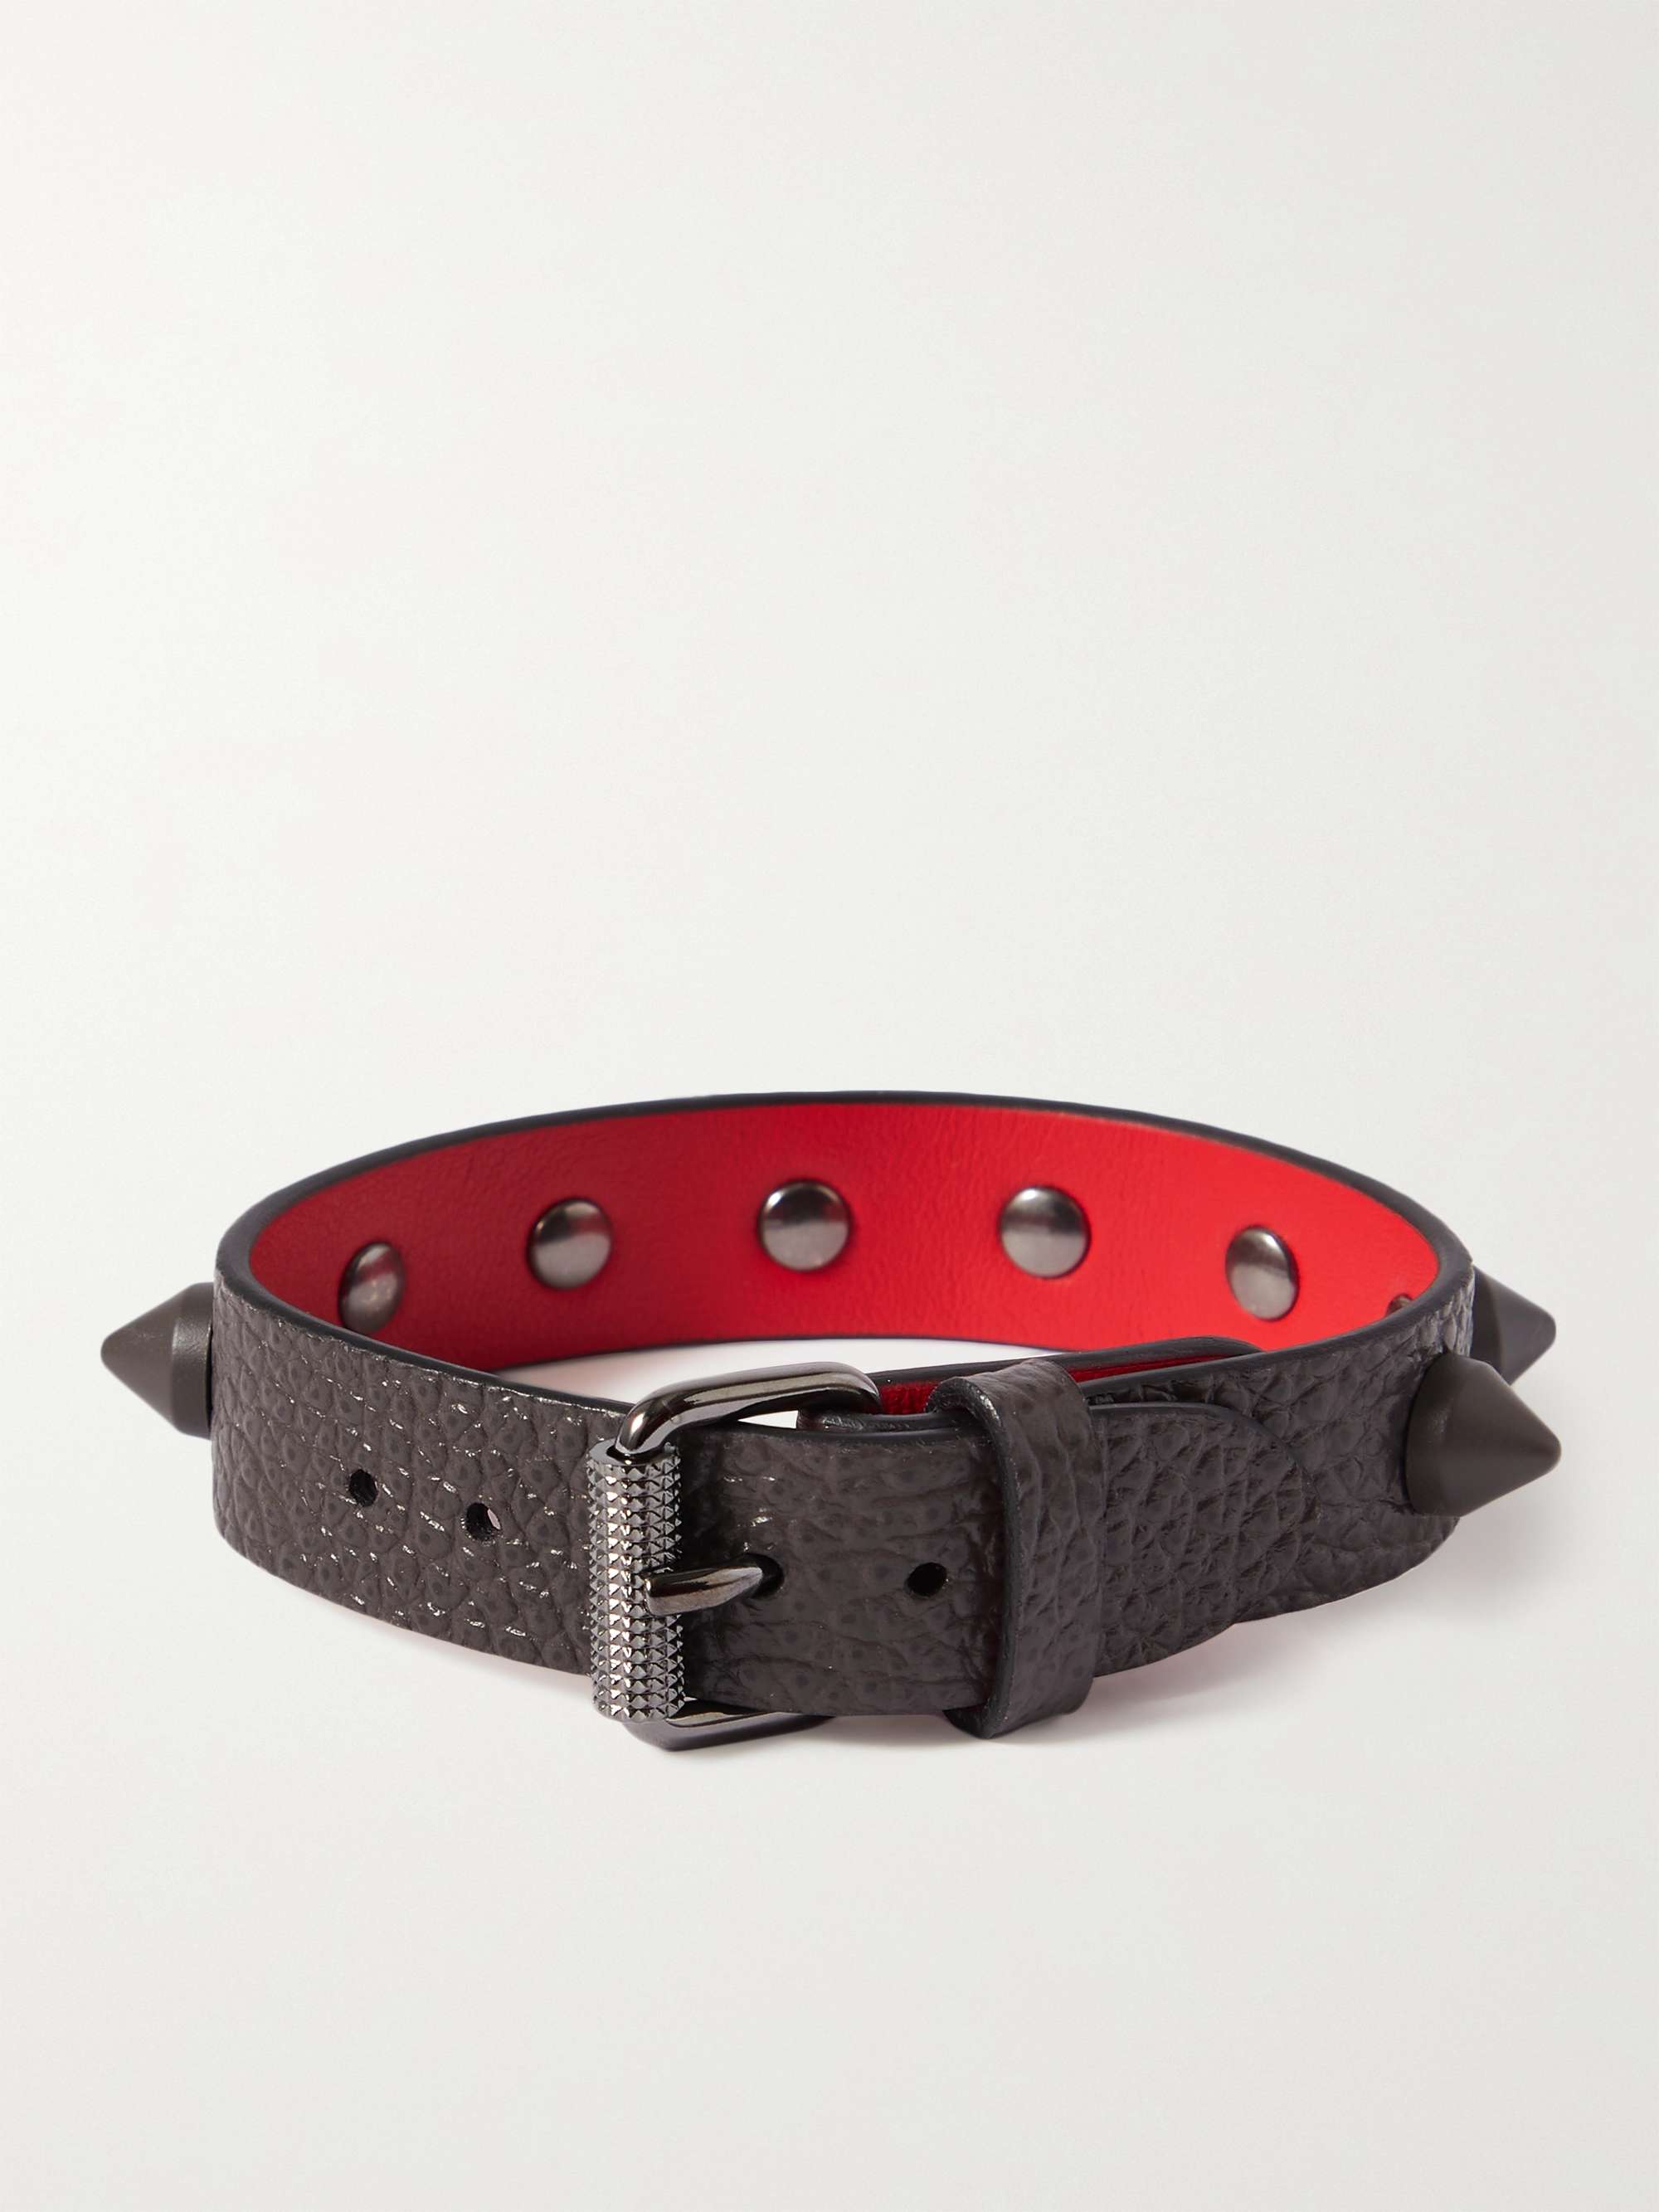 CHRISTIAN LOUBOUTIN Spiked Leather Bracelet